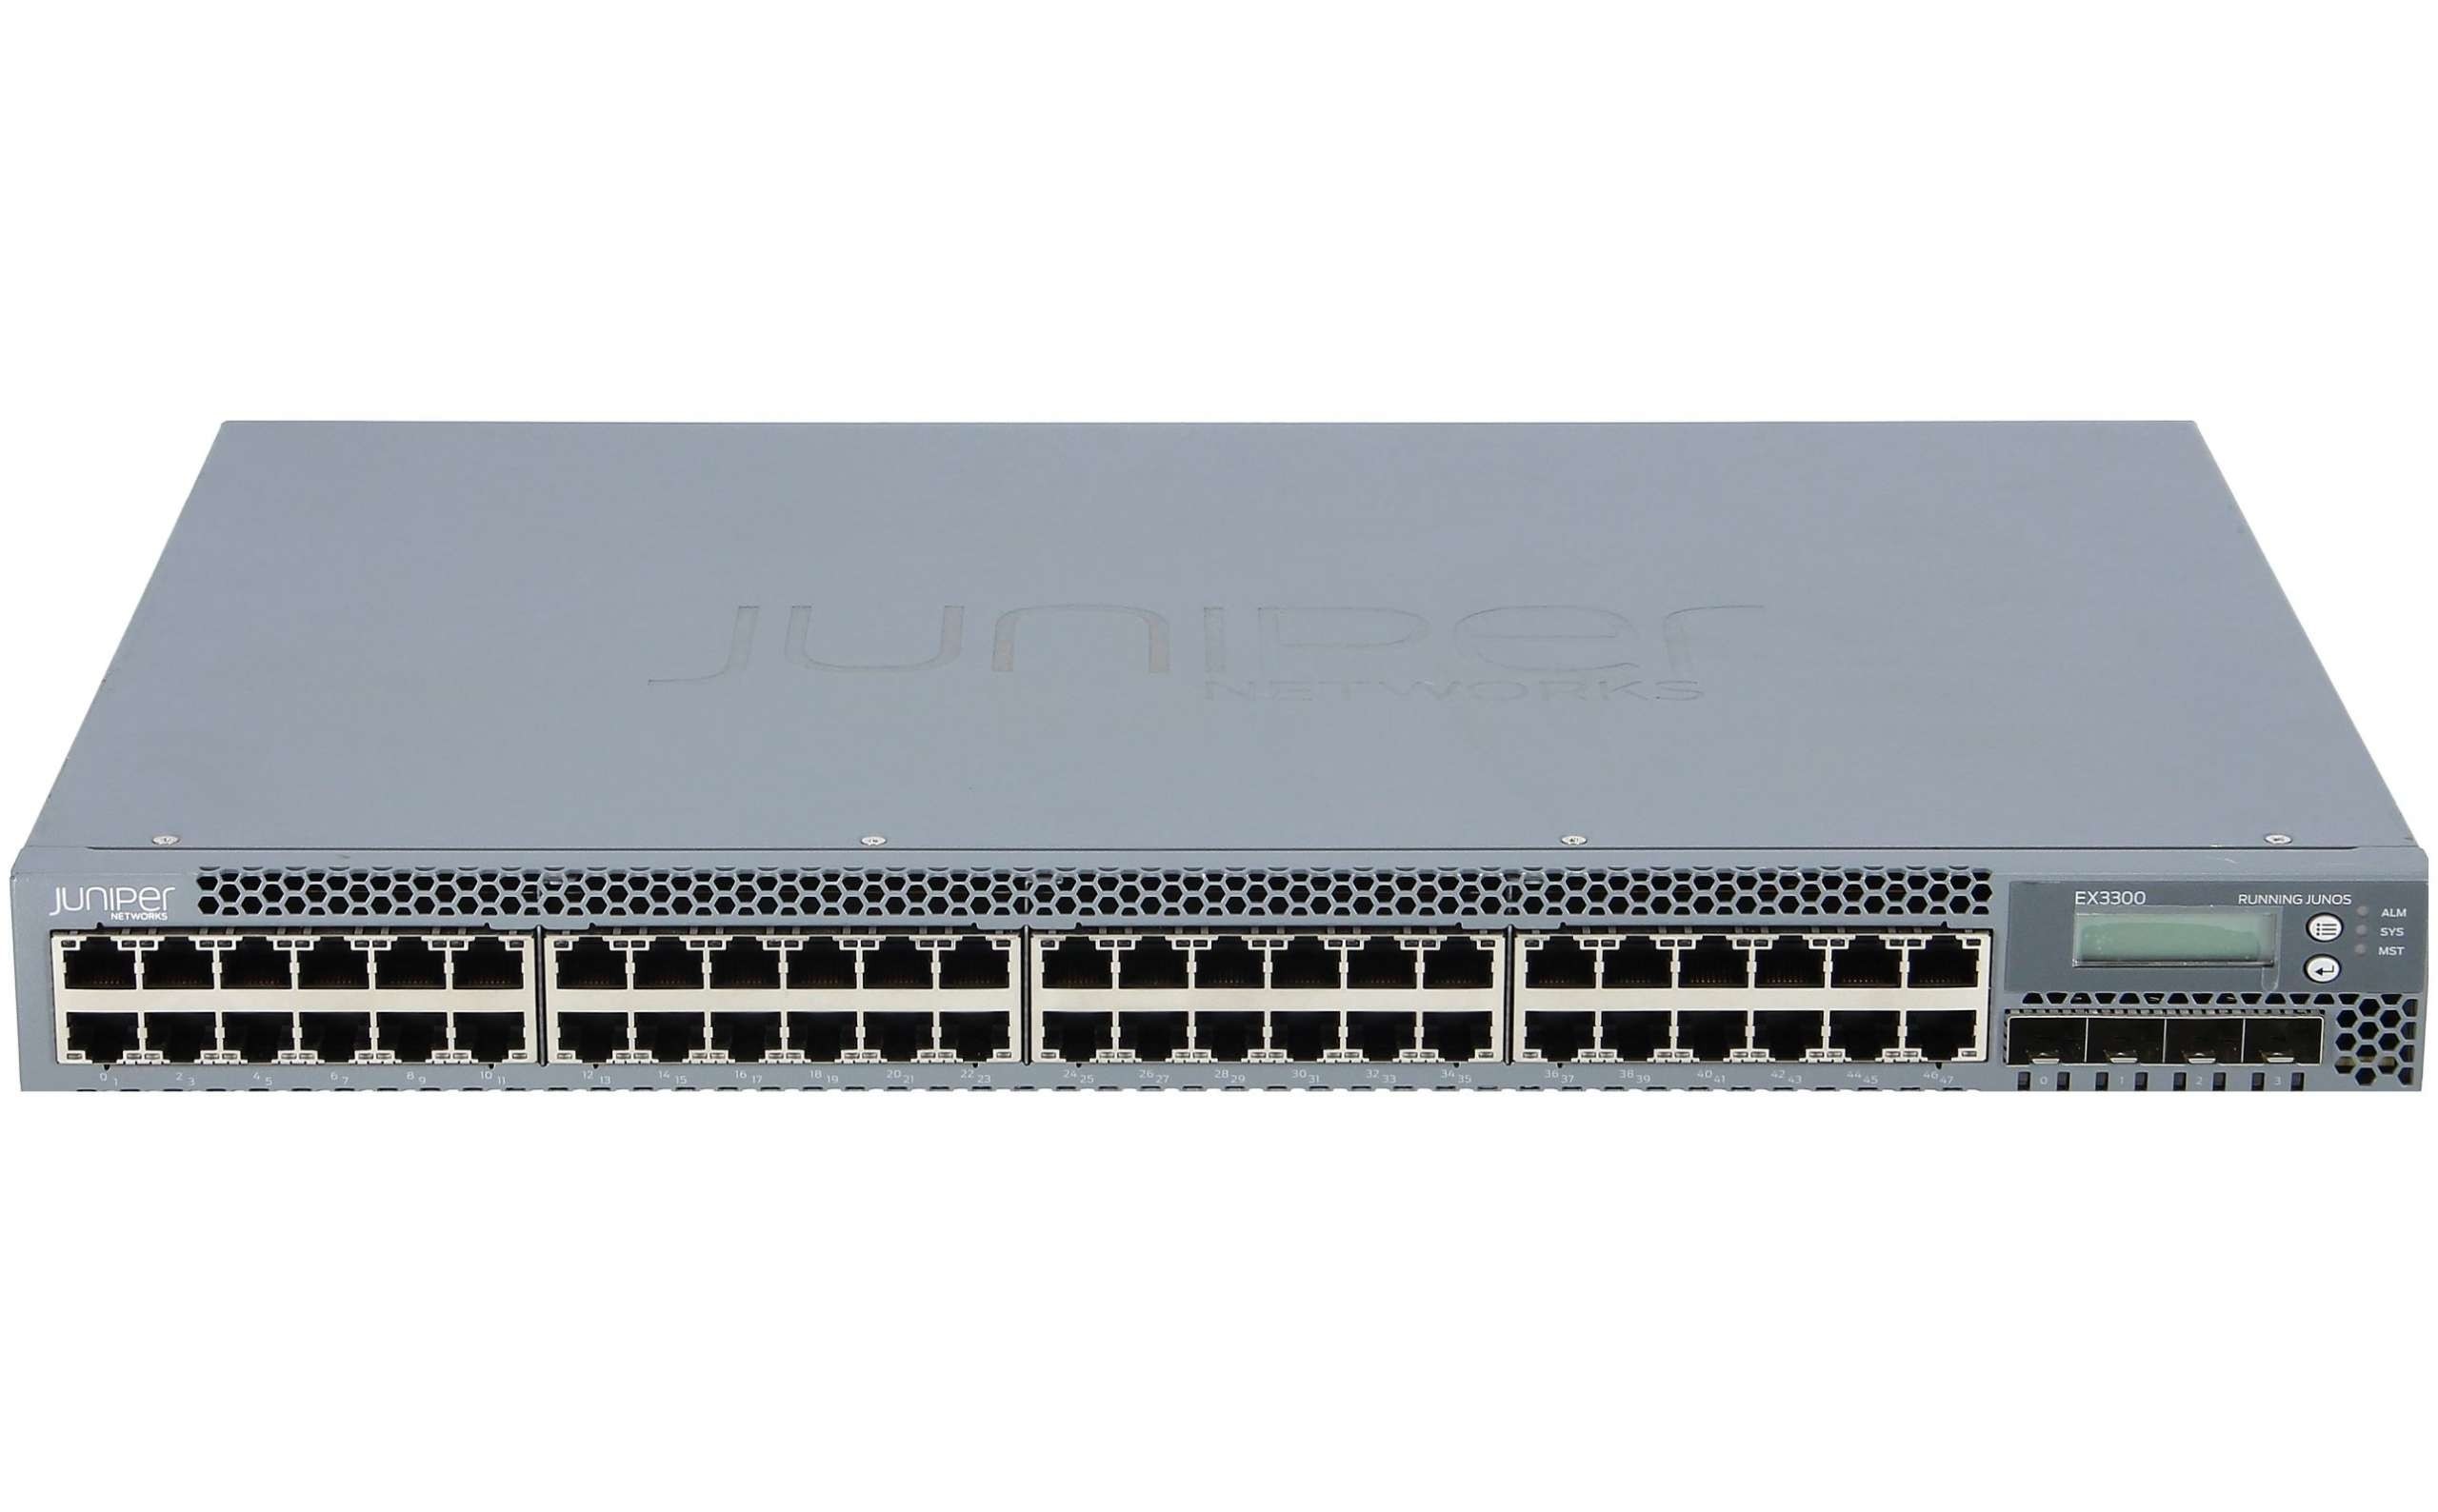 Juniper EX3300-48T-BF 48x RJ-45 1G 4x SFP+ 10Gb SFP+ Managed Switch